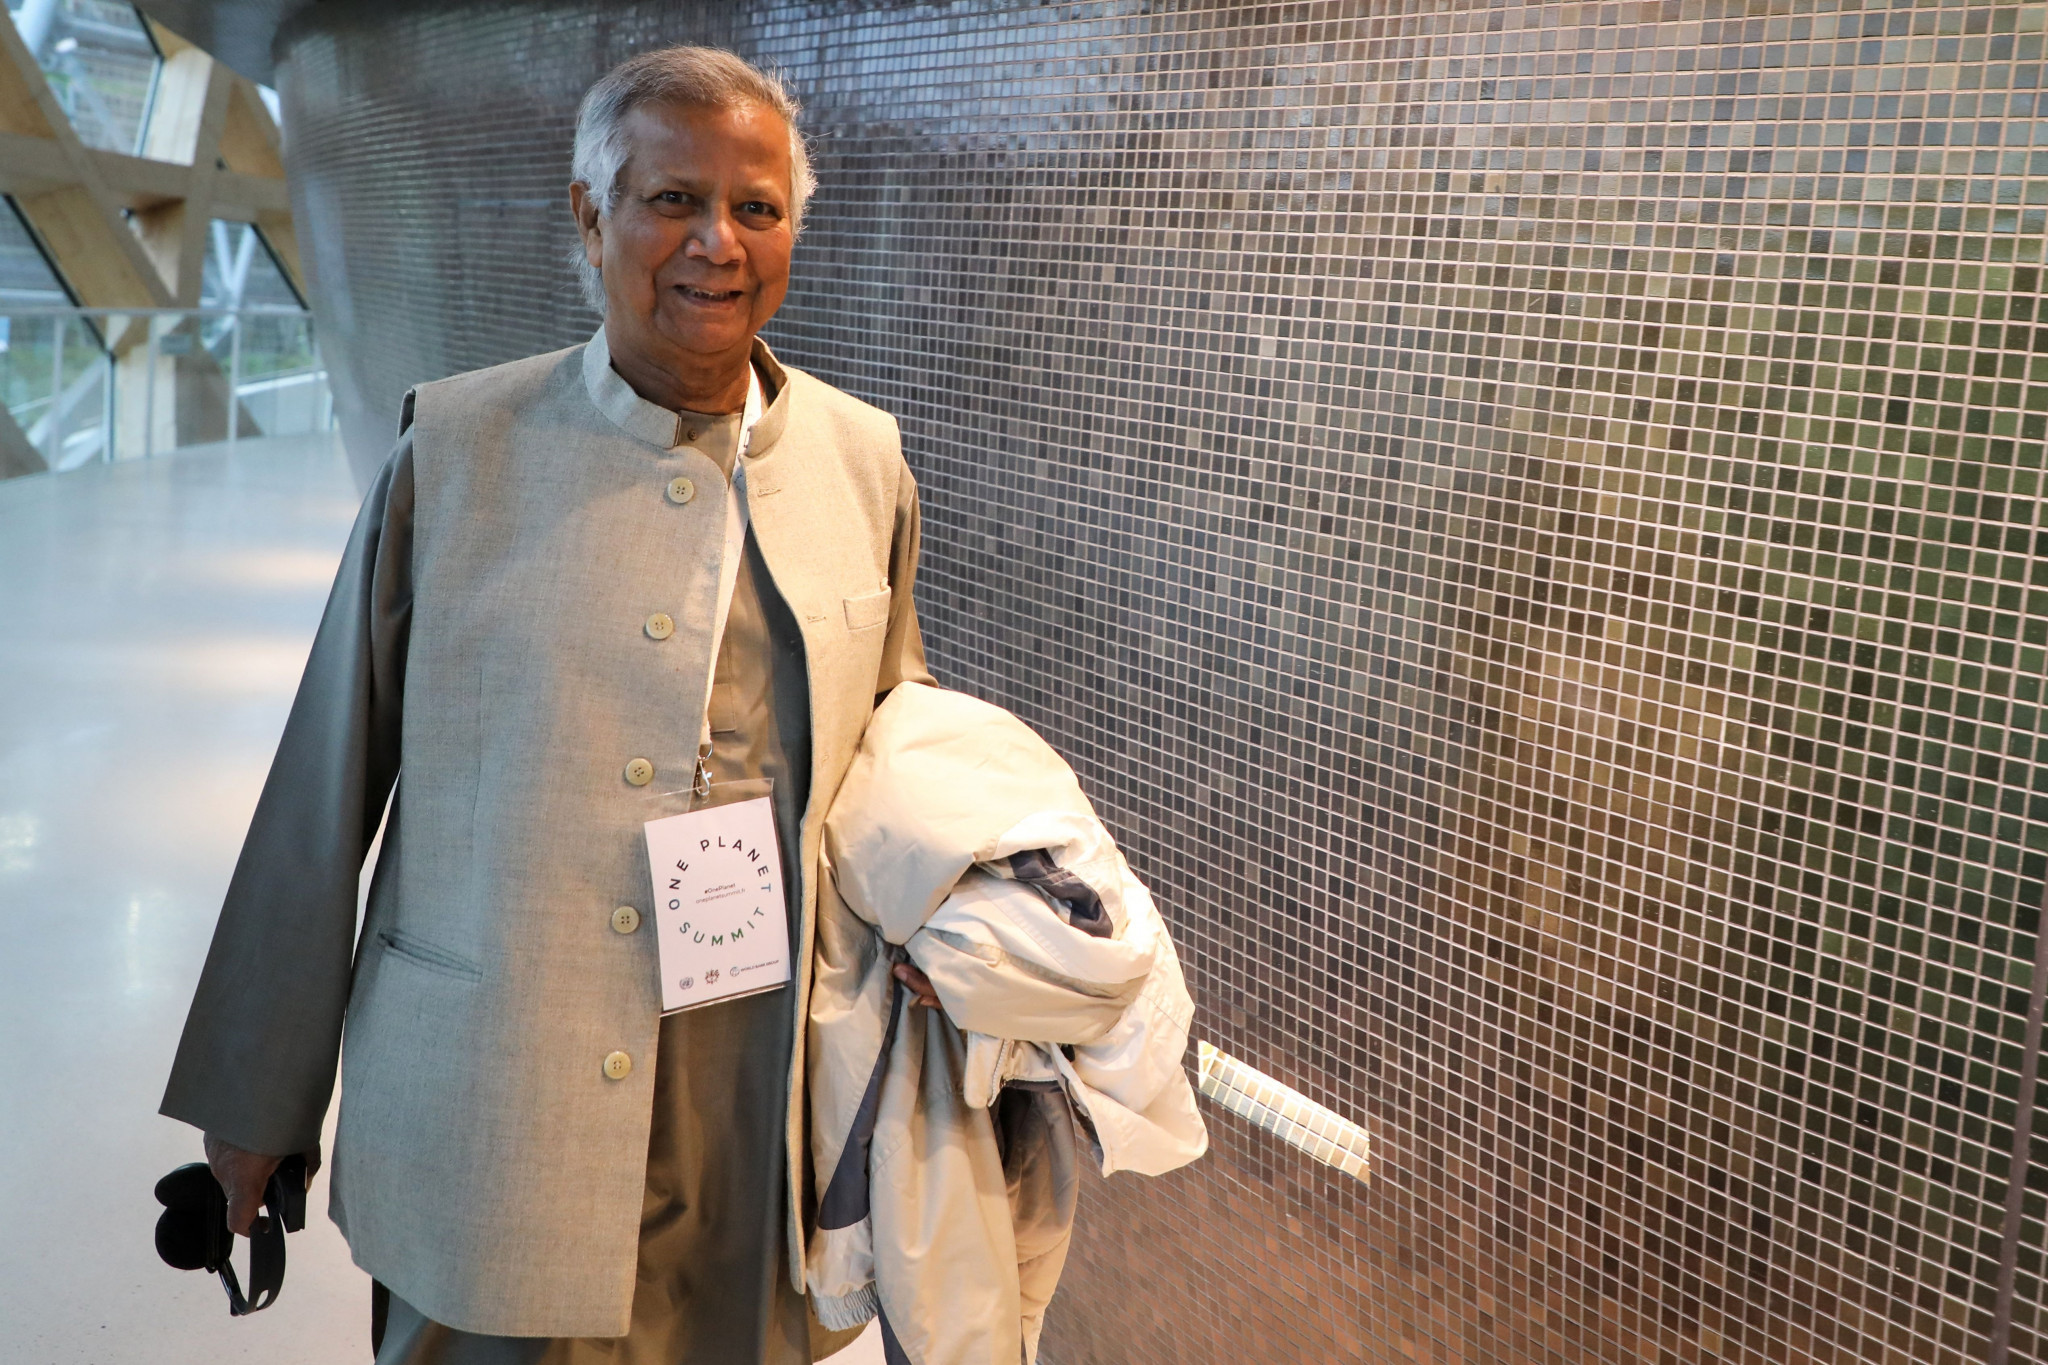 Professor Muhammad Yunus, who won the Nobel Prize in 2006, has been described as a 